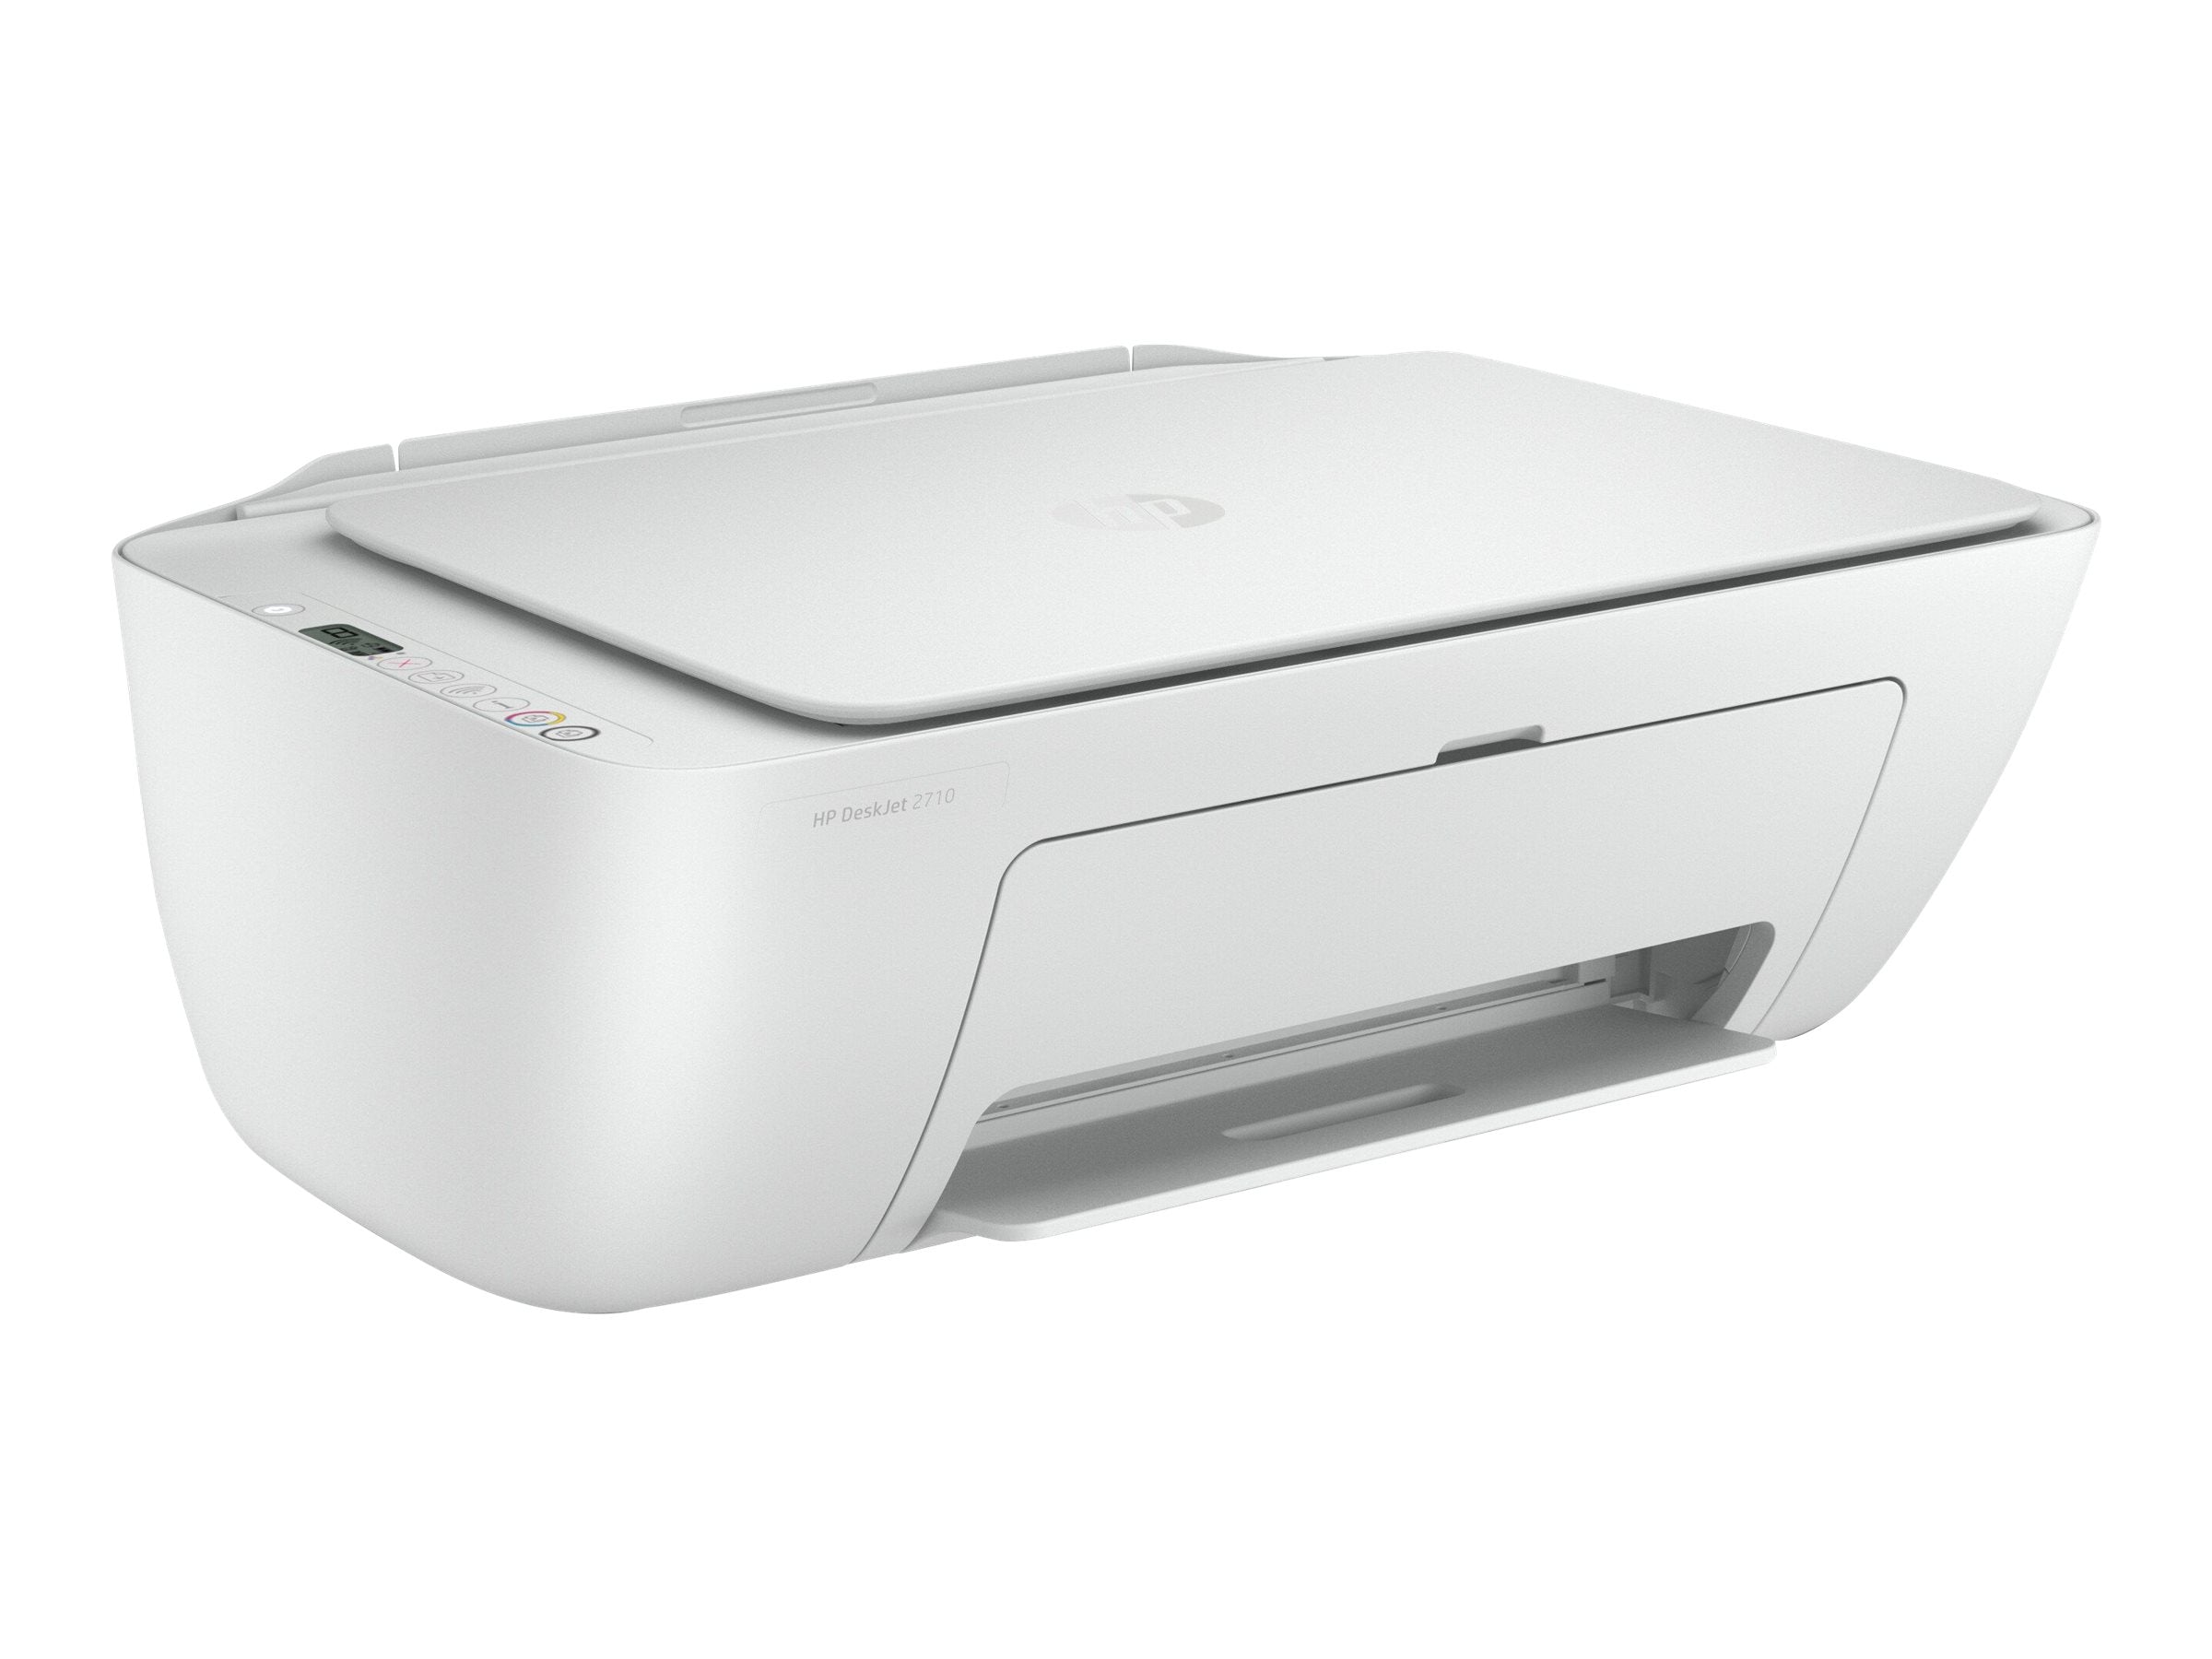 Printer HP Deskjet 2710 AIO